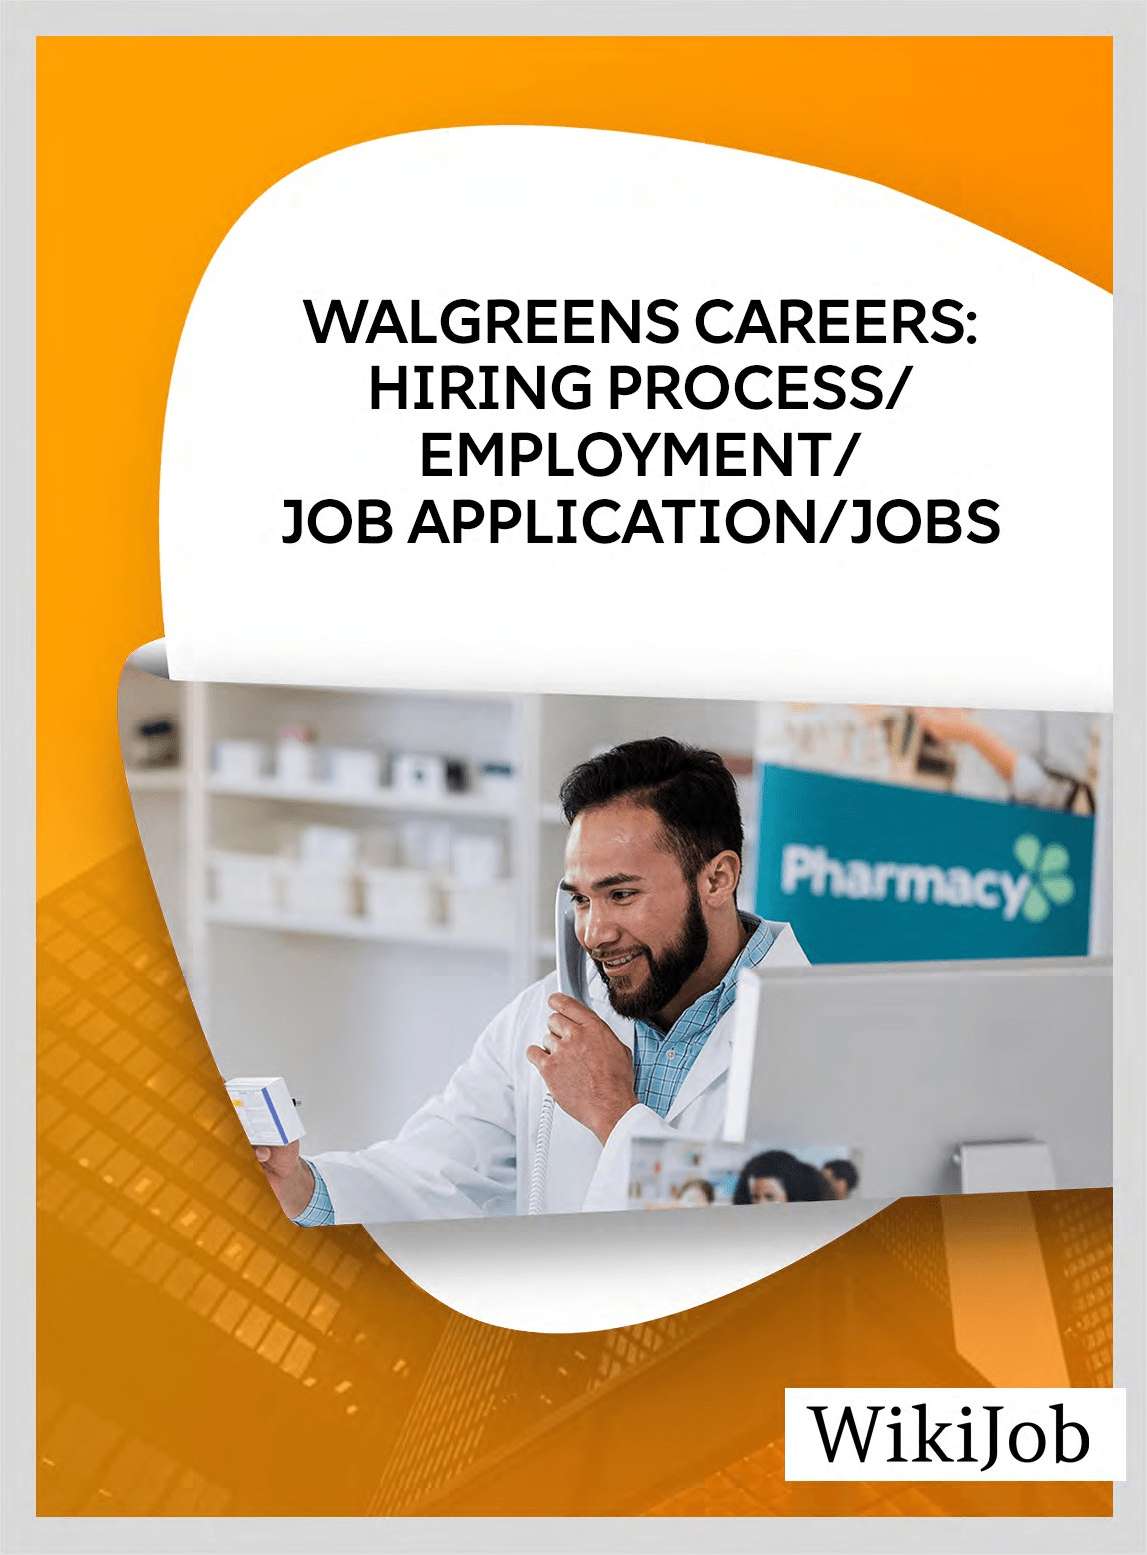 Walgreens Careers: Hiring Process/Employment/Job Application/Jobs